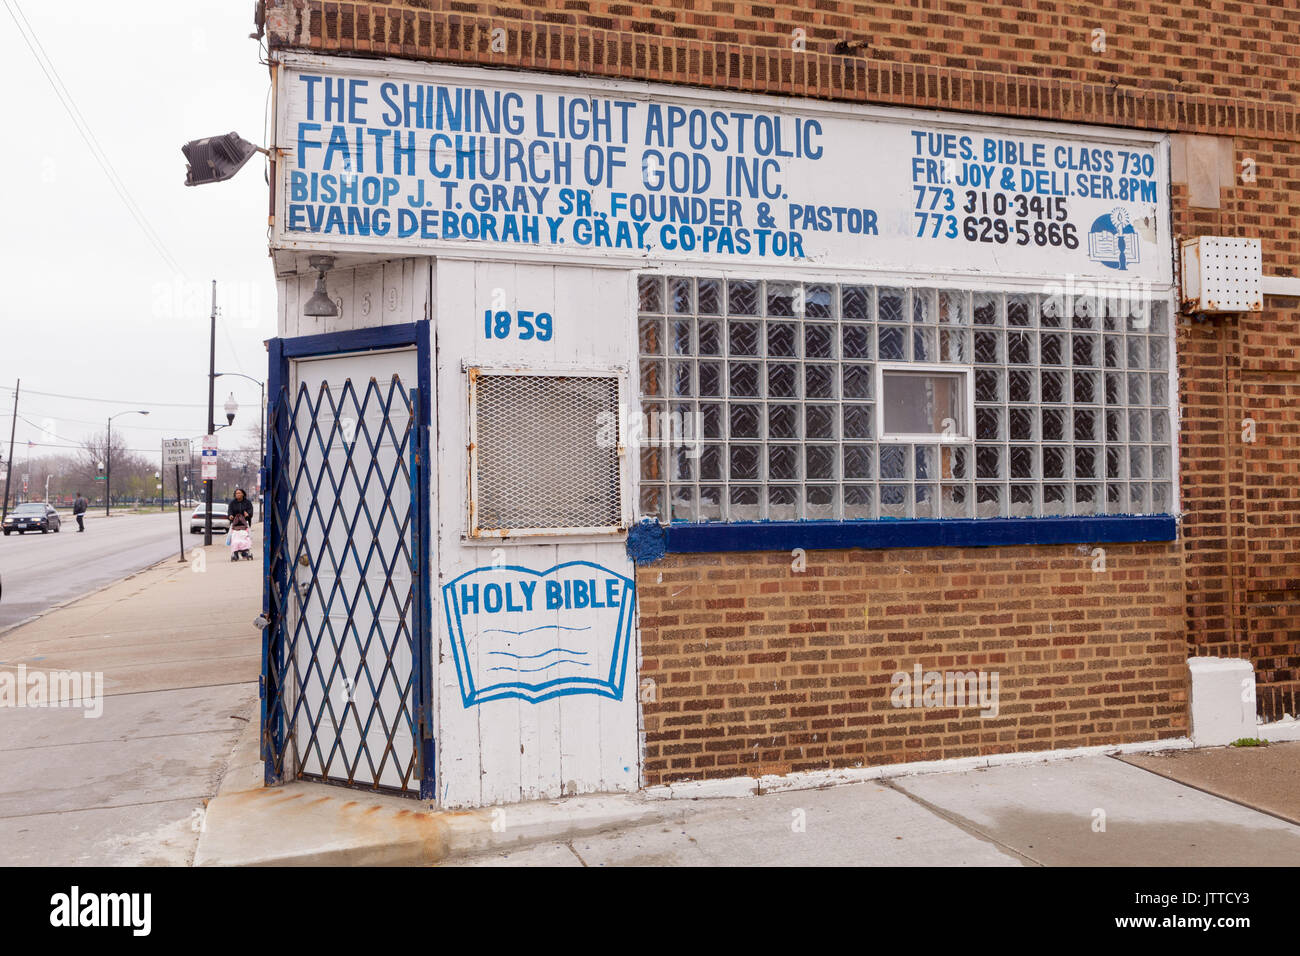 Facade of Shining Light Apostolic Faith Church of God, on the South Side of Chicago, Illinois. Stock Photo